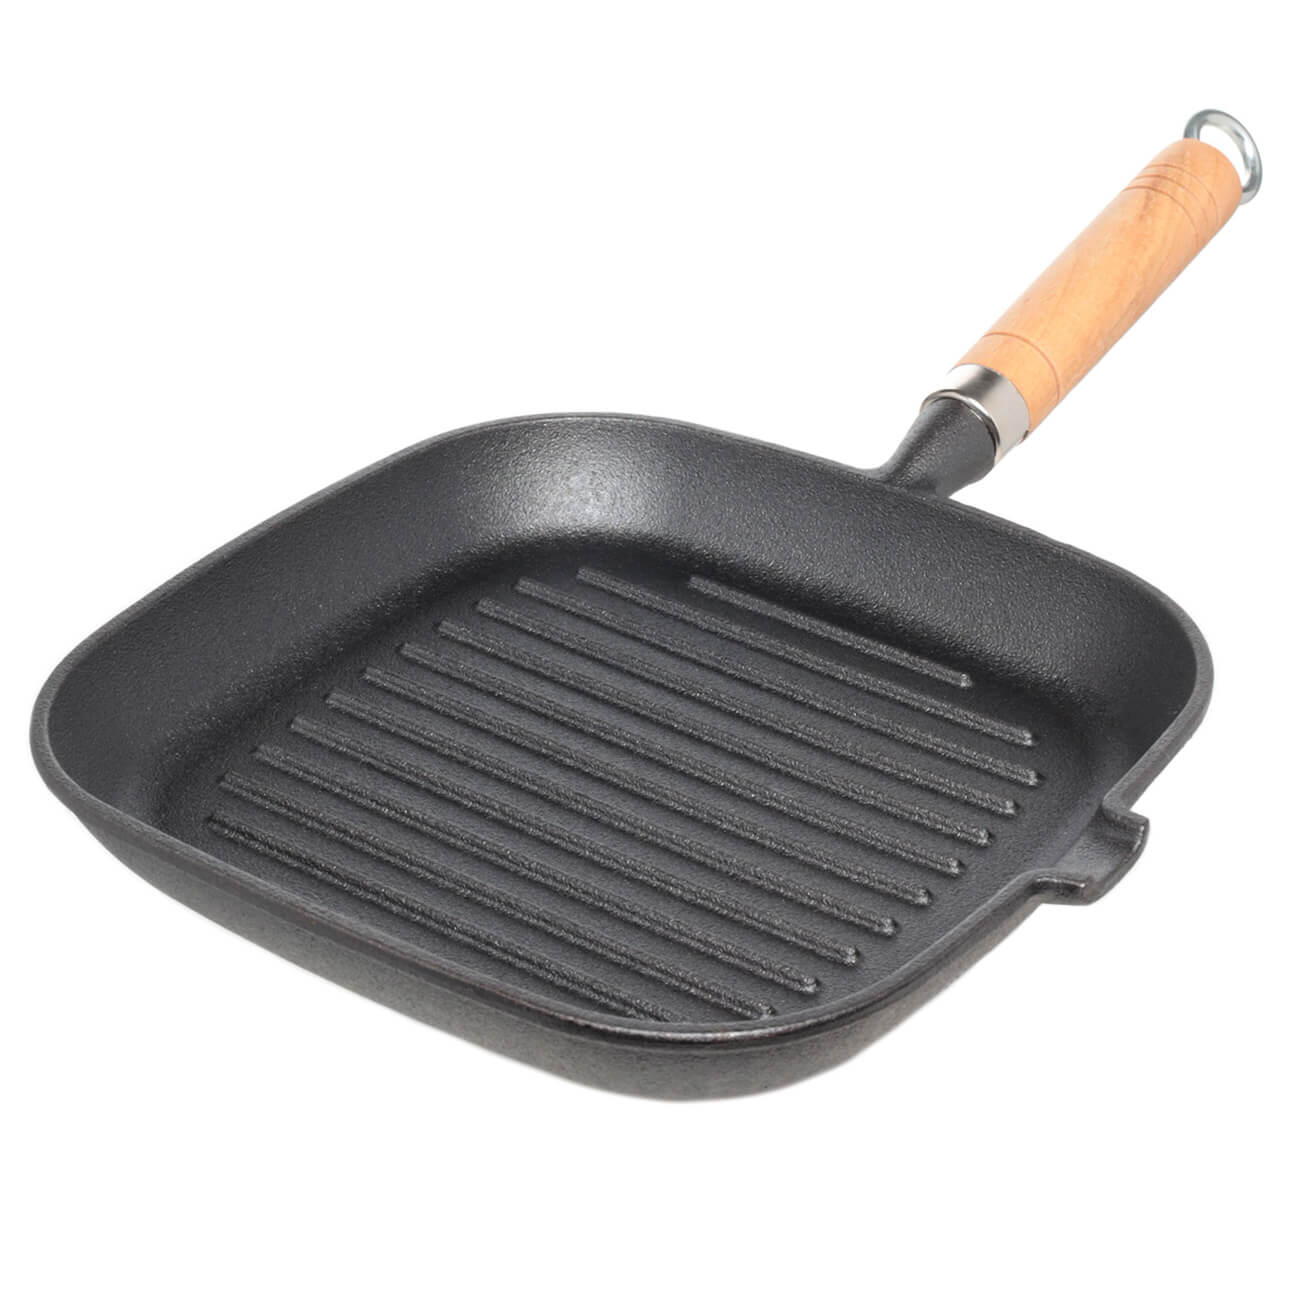 Grill pan, 23 cm, cast iron / wood, square, black, Authentic изображение № 1